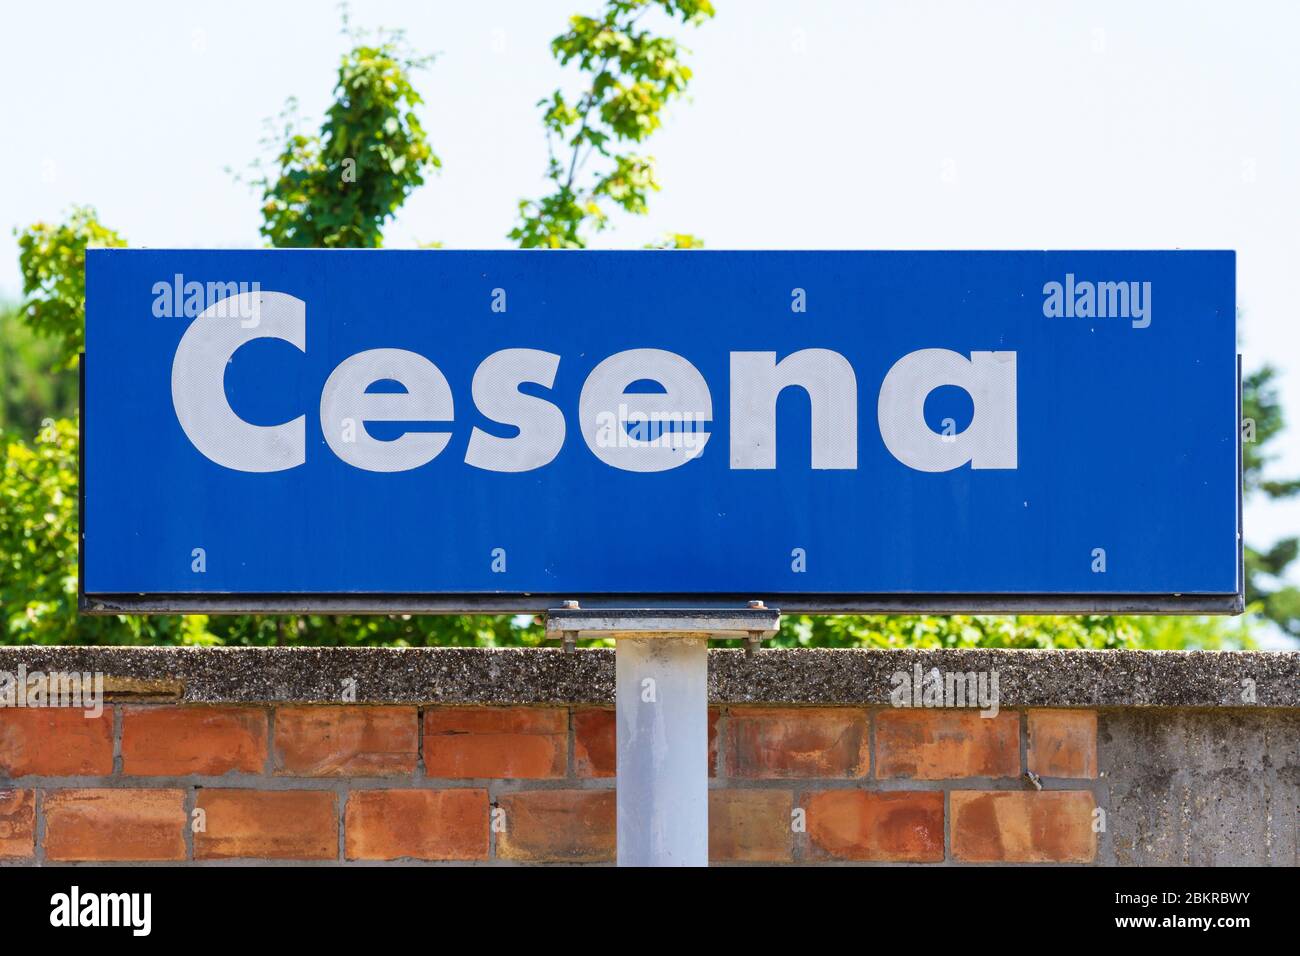 Estación de tren cartel de la plataforma de Cesena, Emilia-Romagna, Italia. Foto de stock